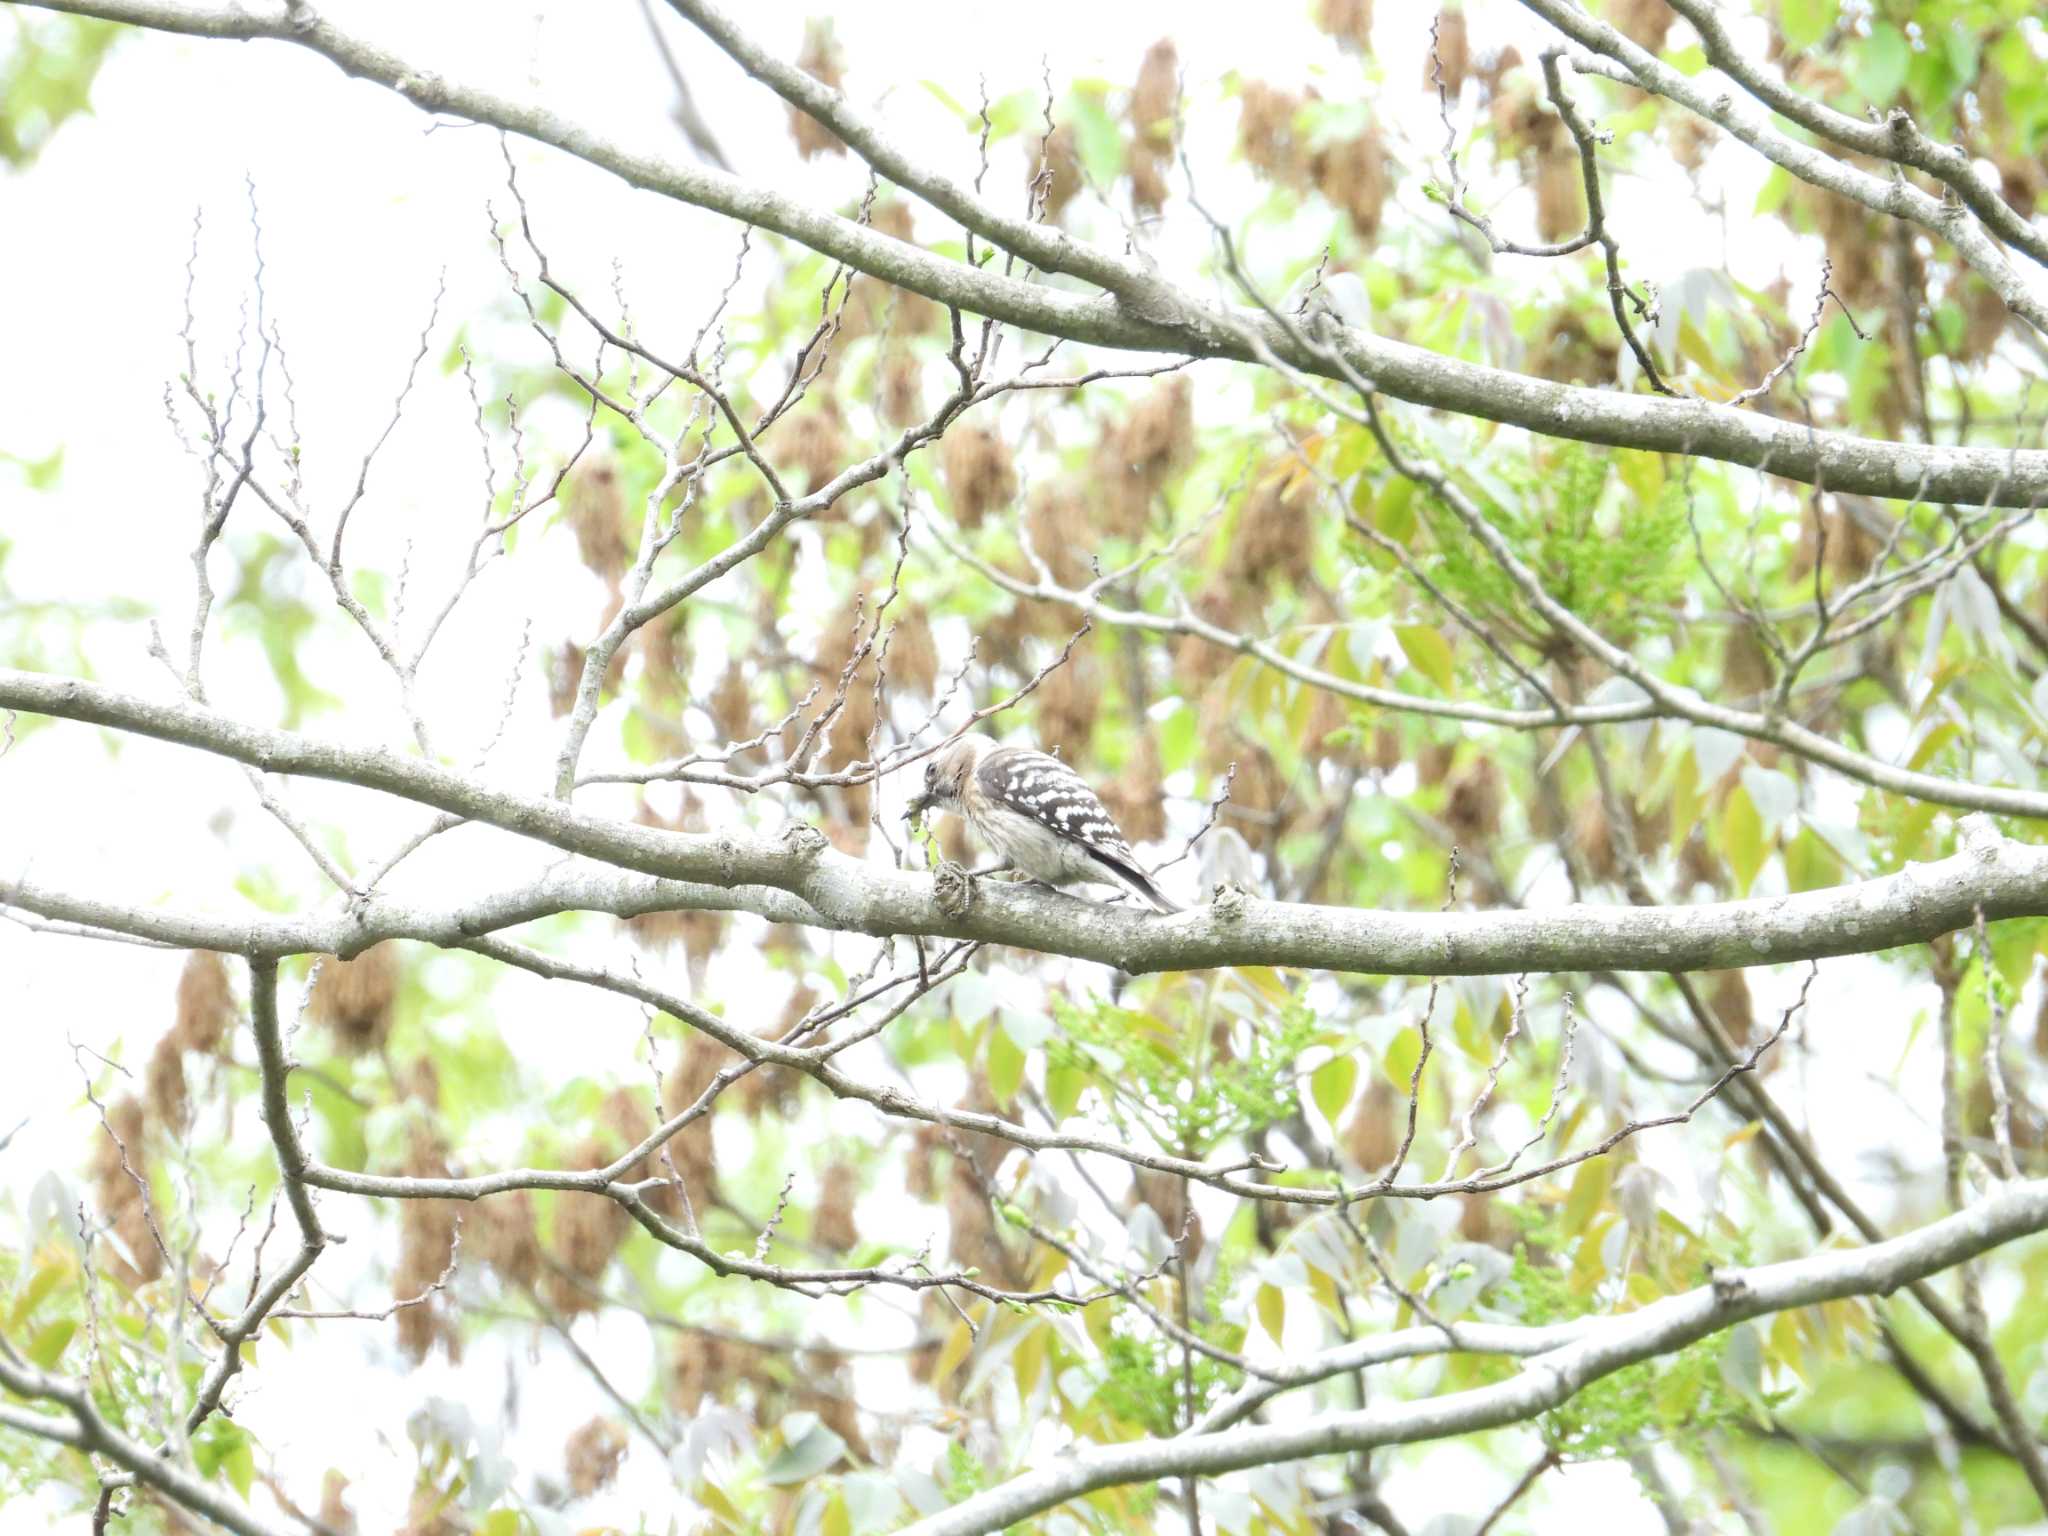 Photo of Japanese Pygmy Woodpecker at 木更津市 by かあちゃん